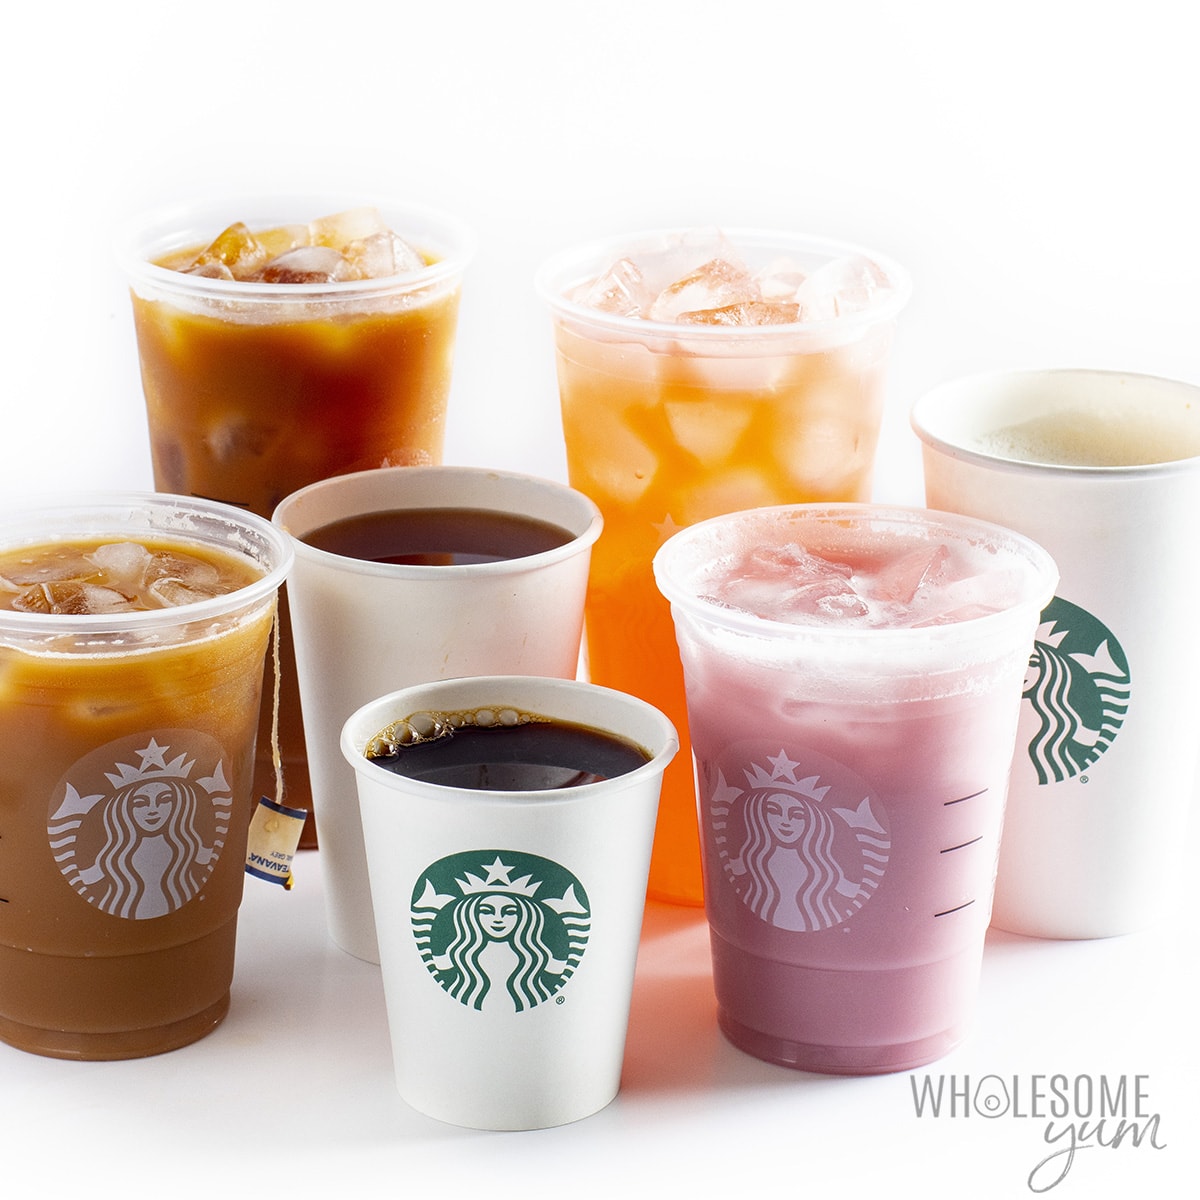 Keto Starbucks drinks in cups.